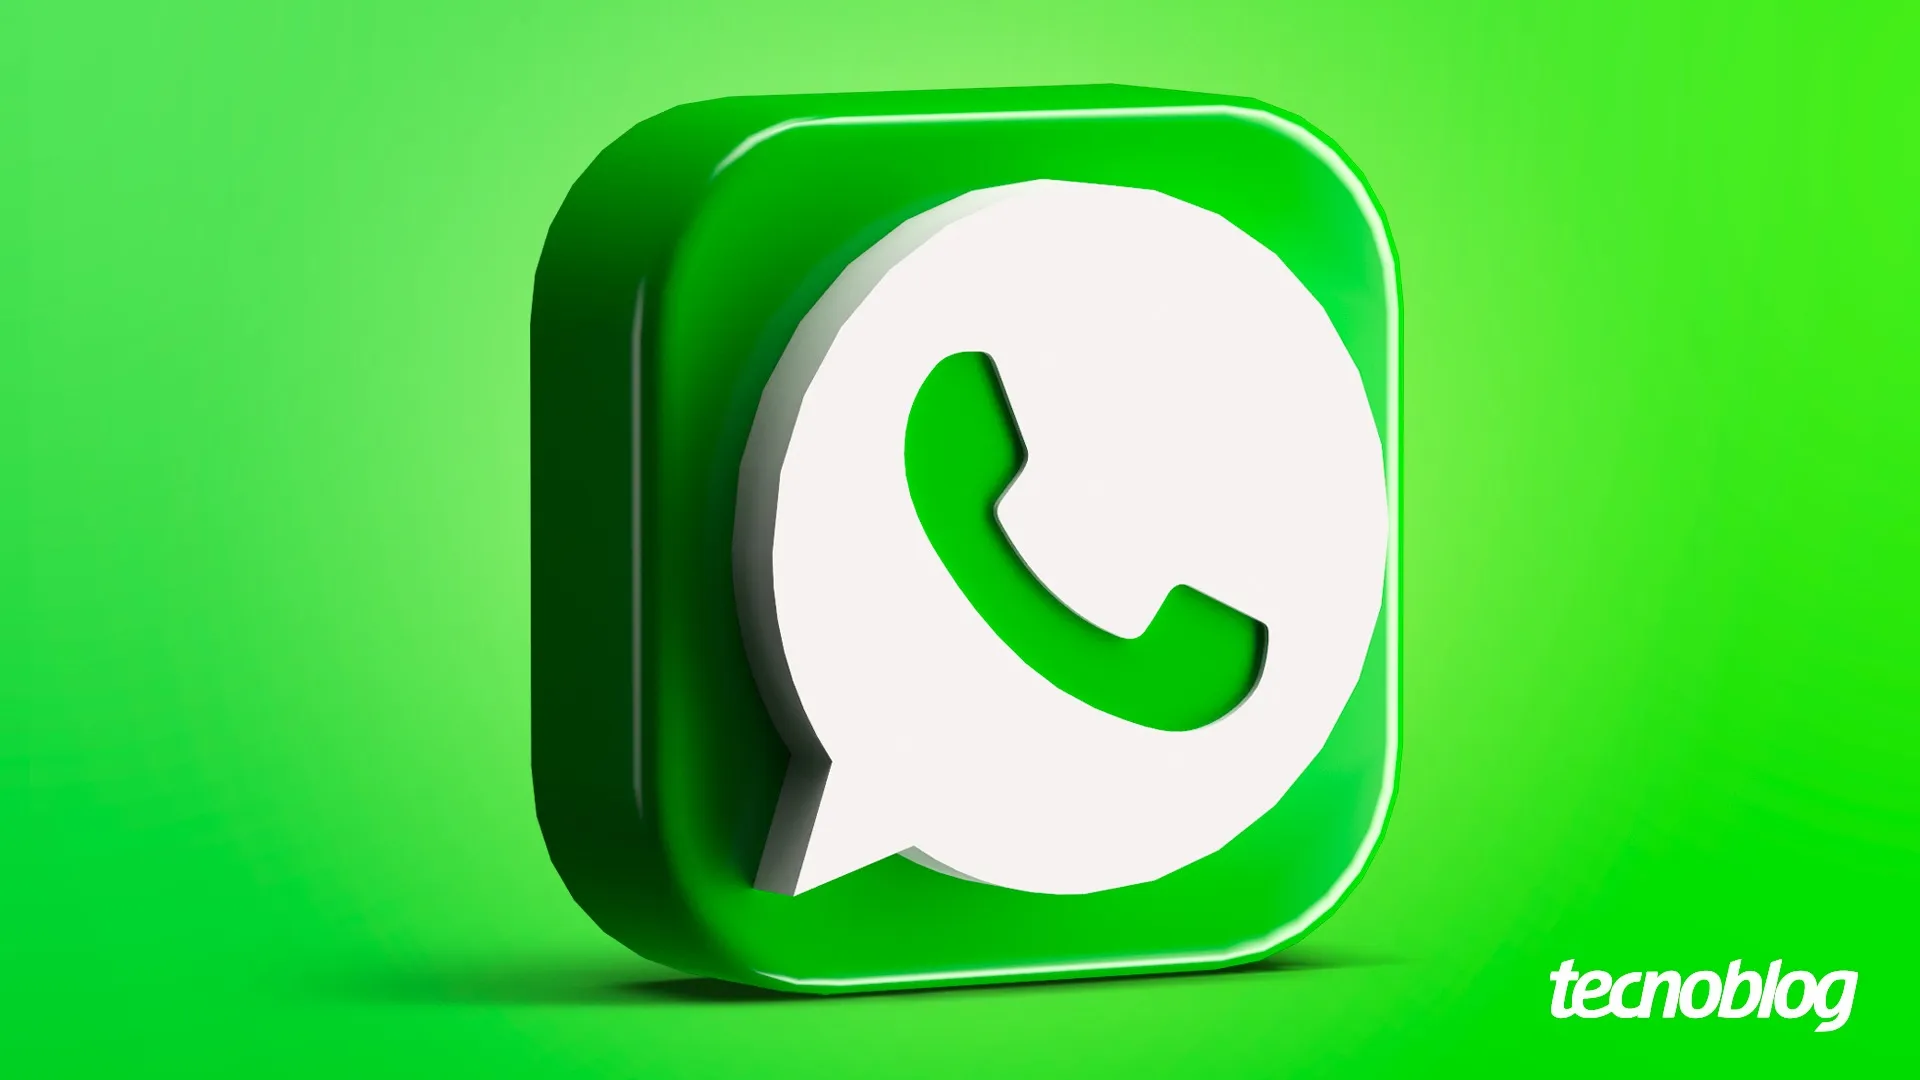 WhatsApp начинает открытую бета-версию WhatsApp Business сегодня в некоторых странах!